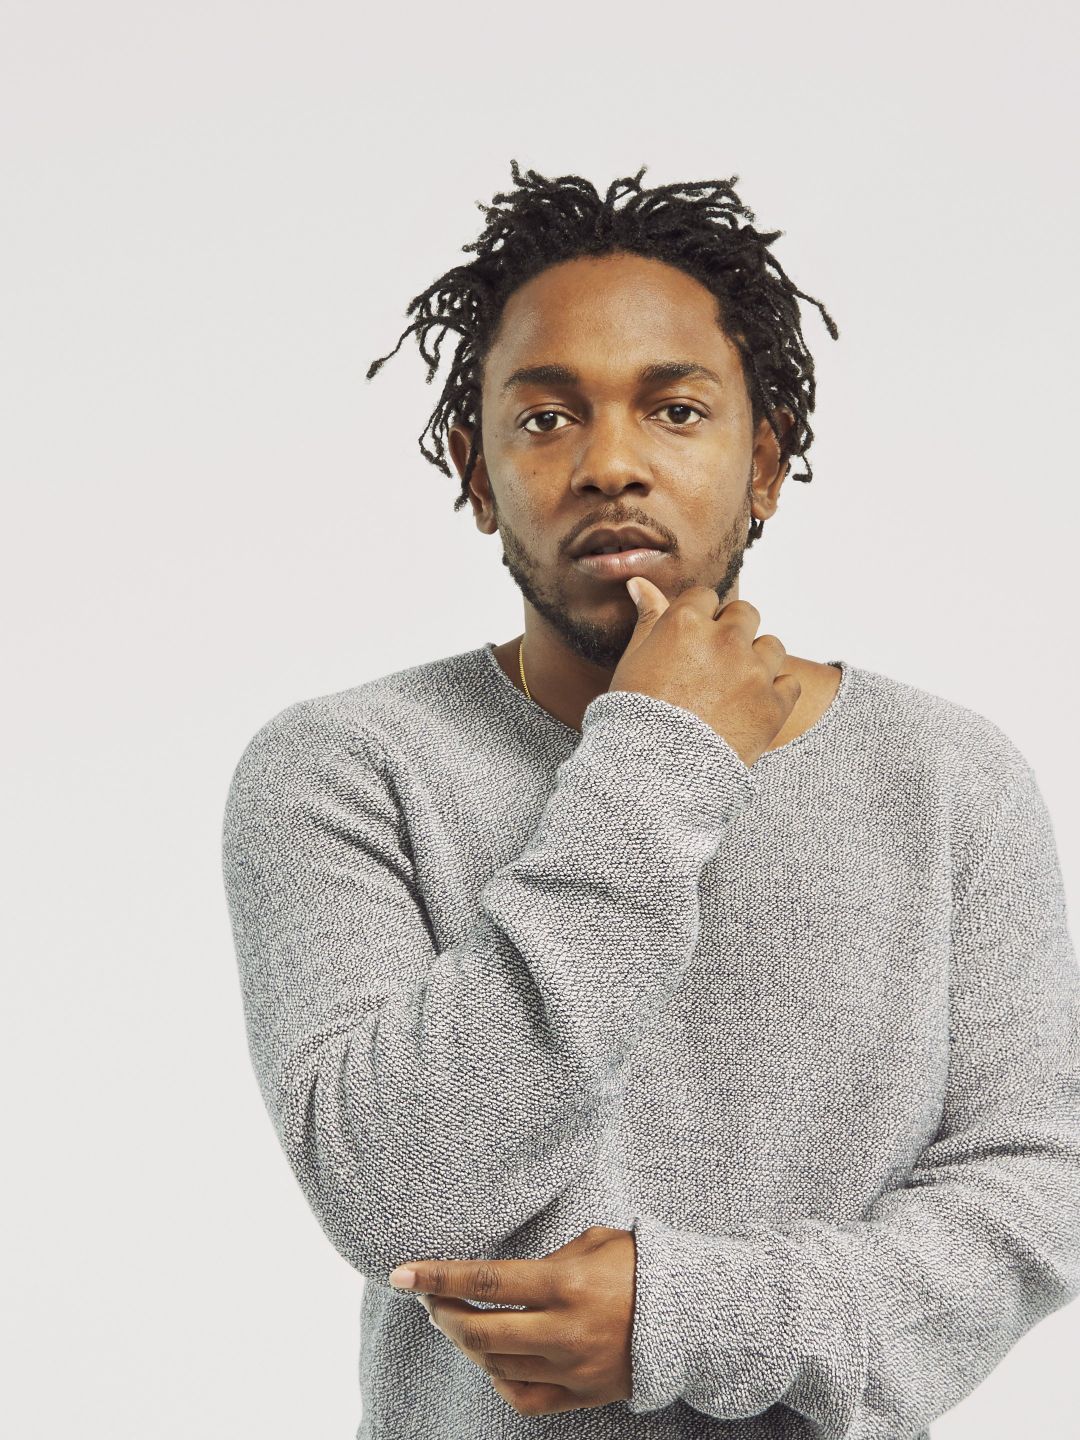 Kendrick Lamar date of birth